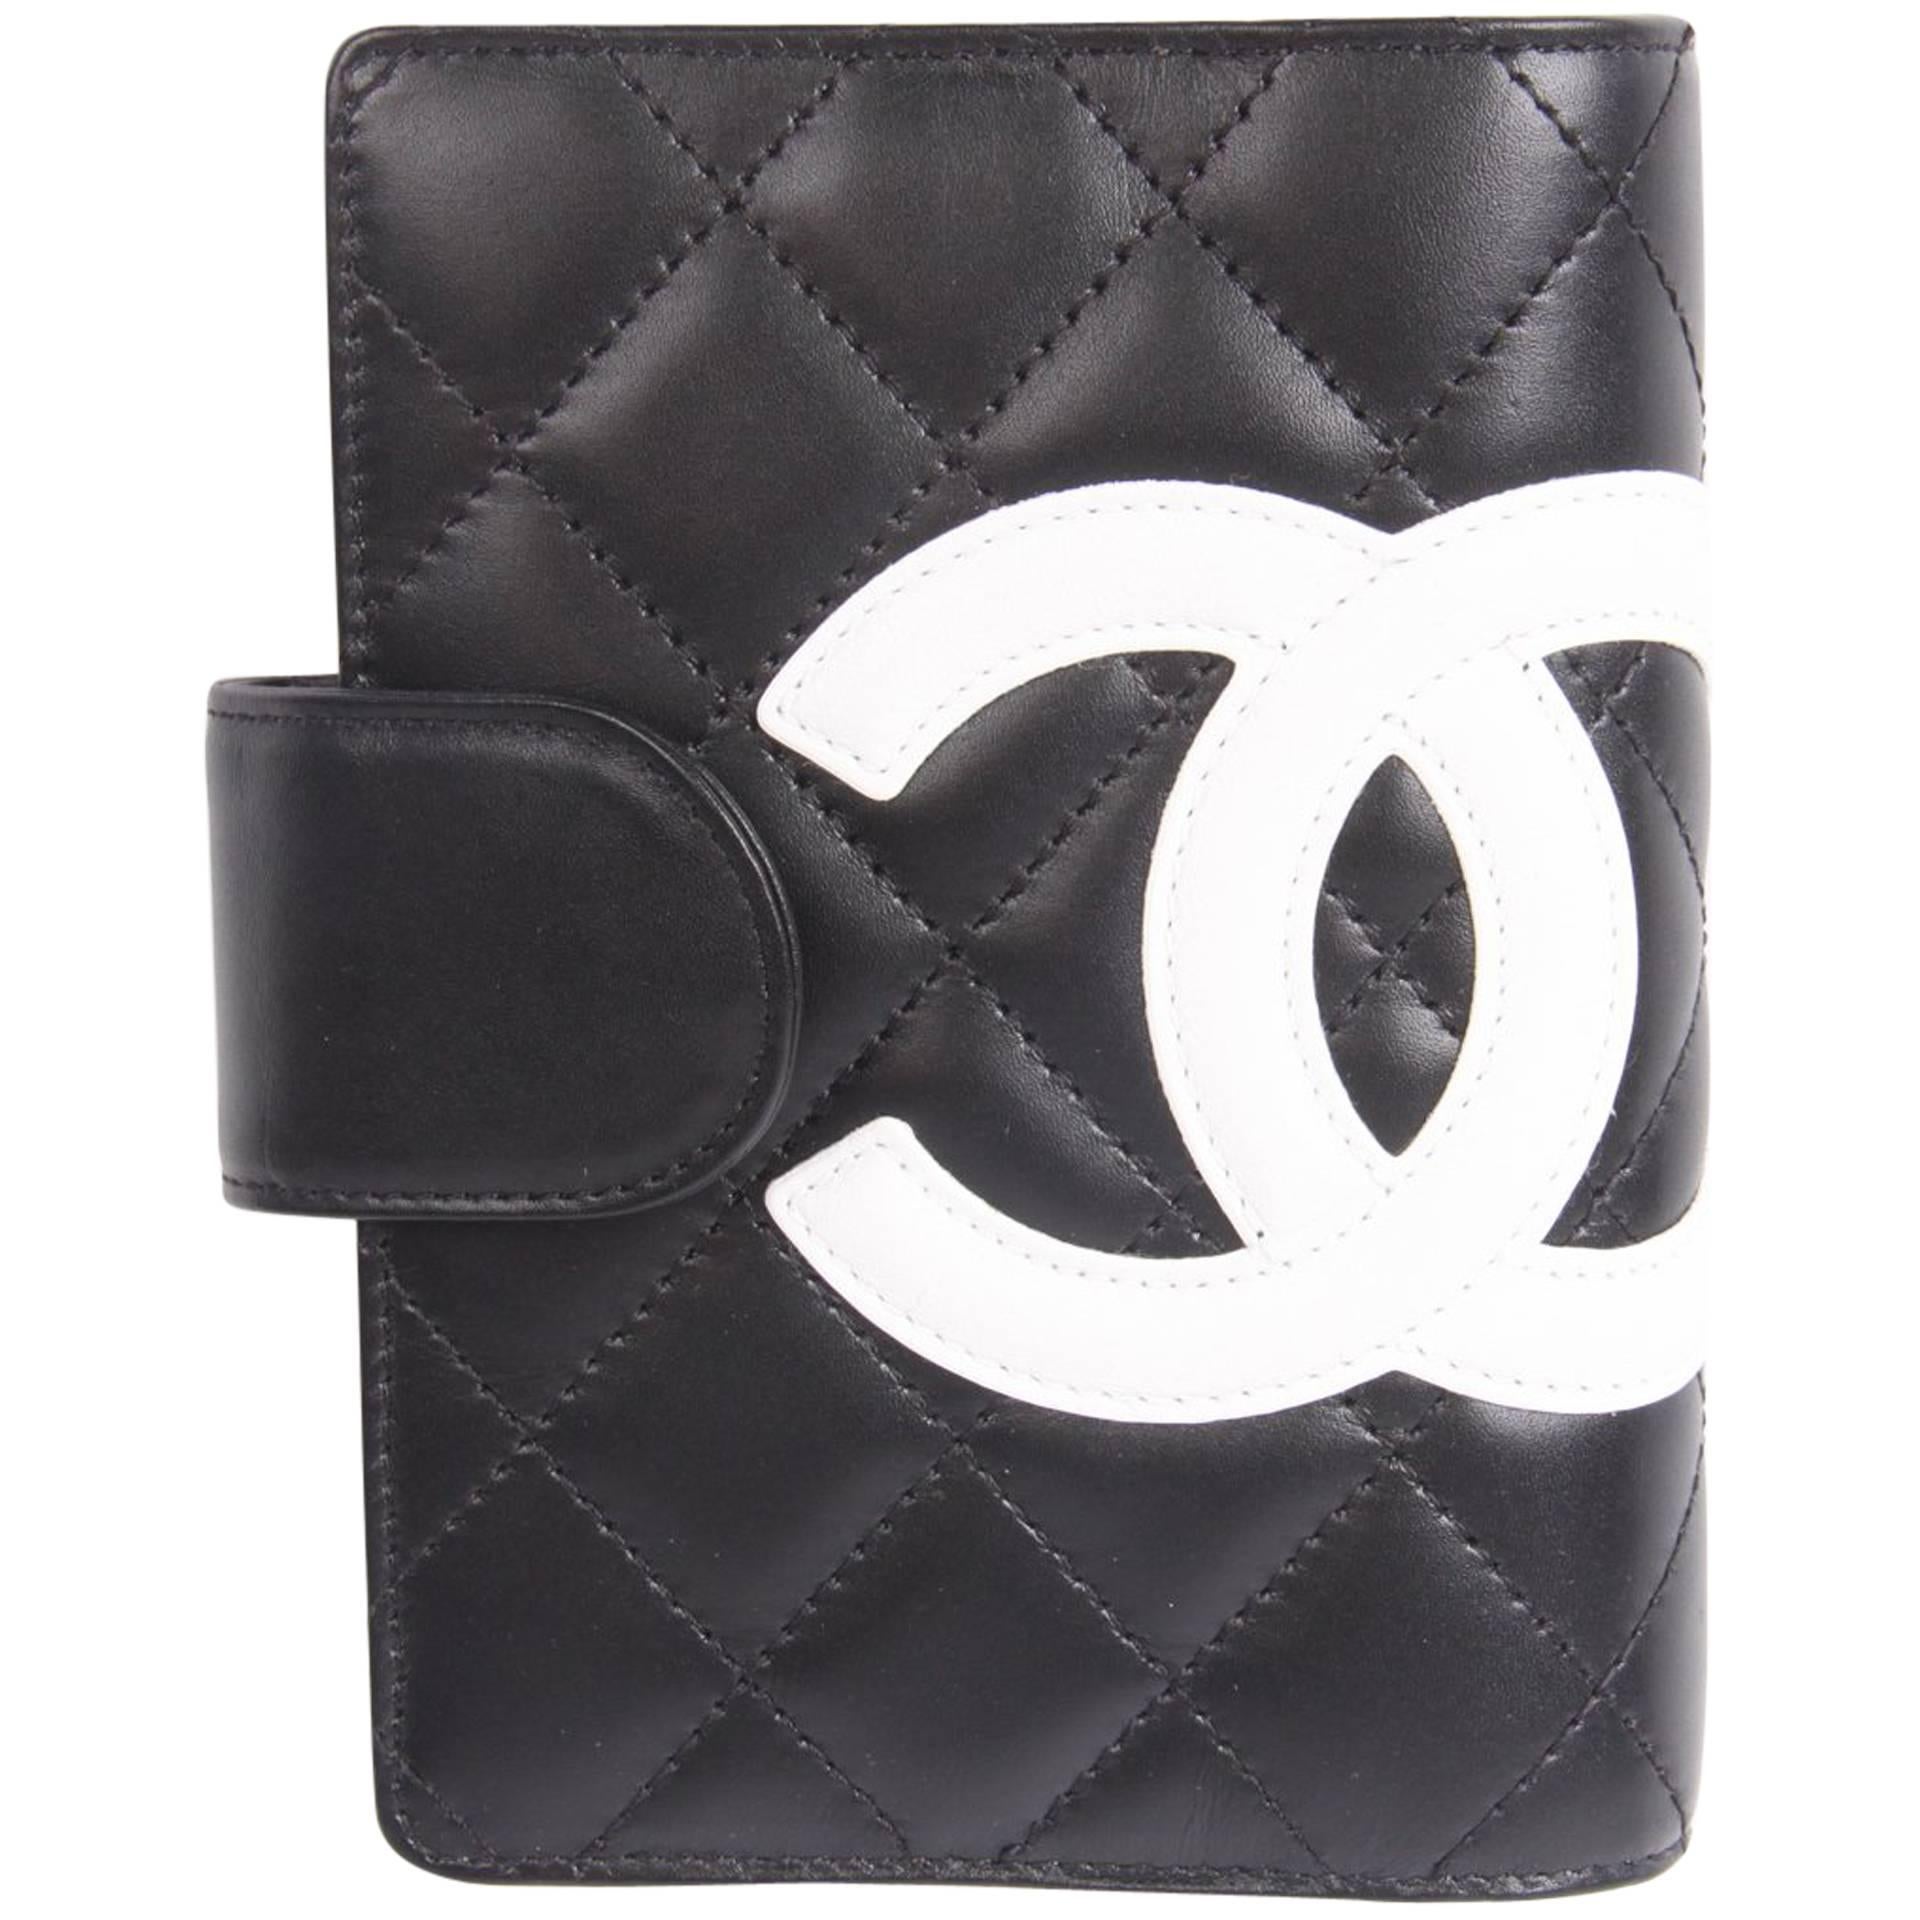 Chanel Quilted Ligne Cambon Agenda Cover - black & white 